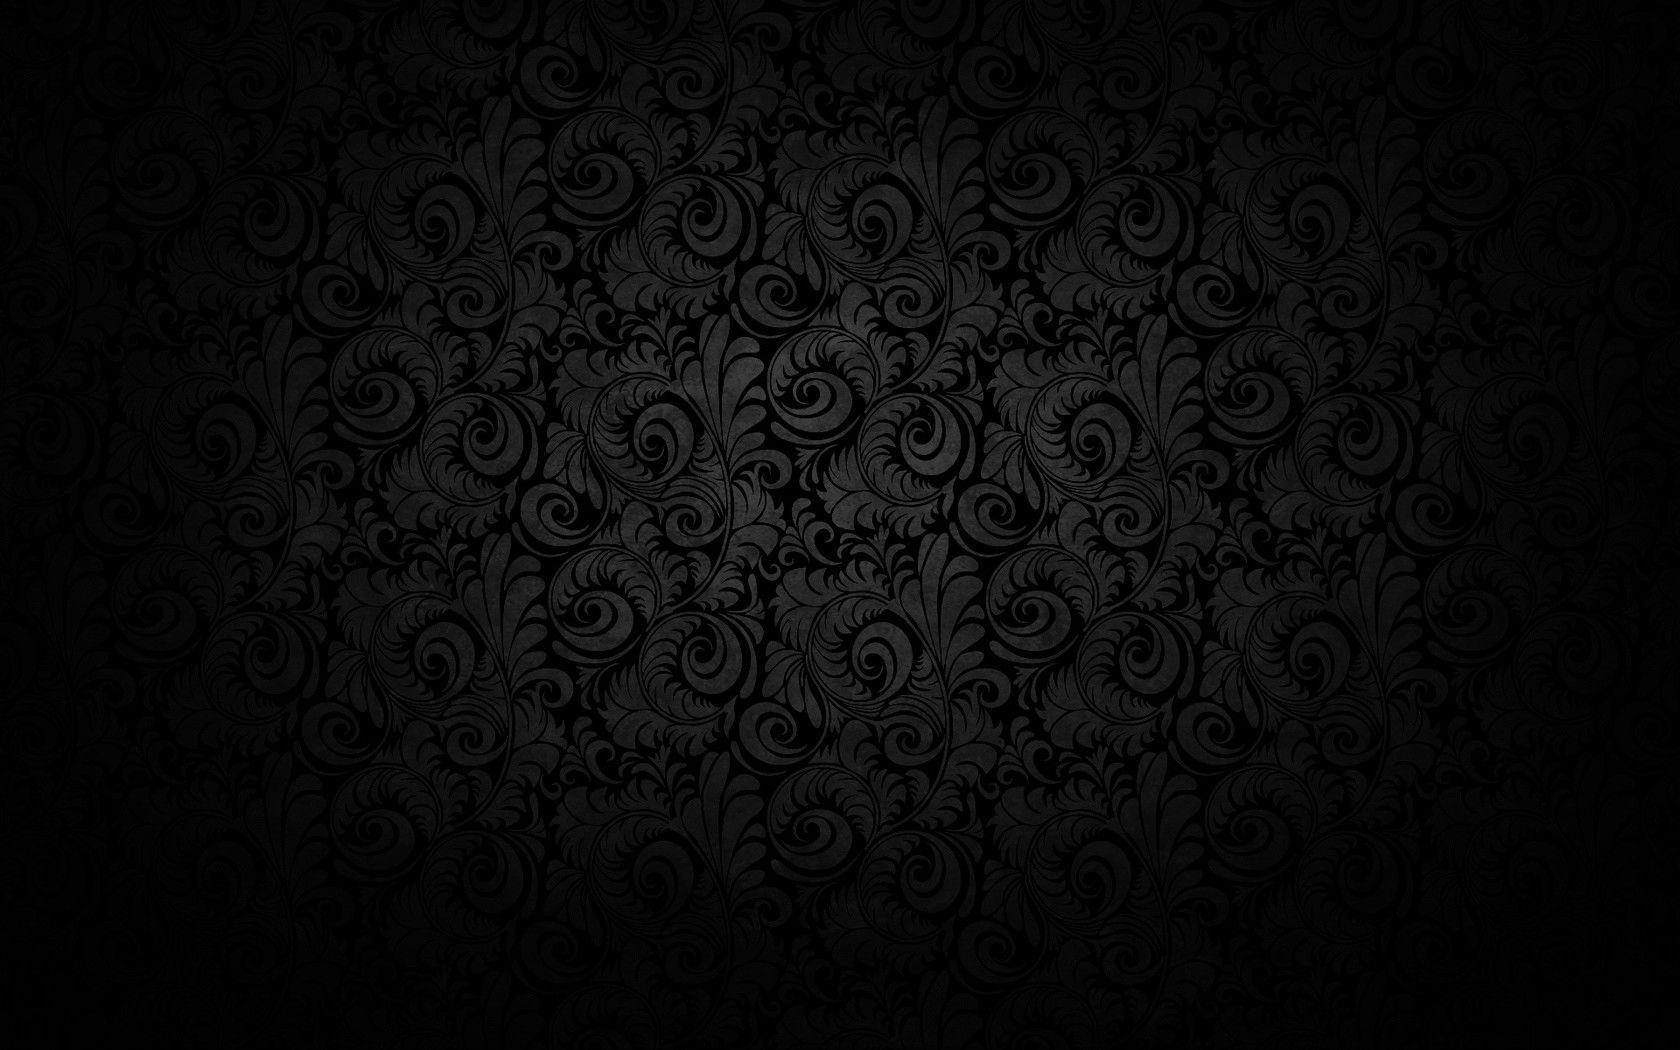 windows 8 wallpaper hd black